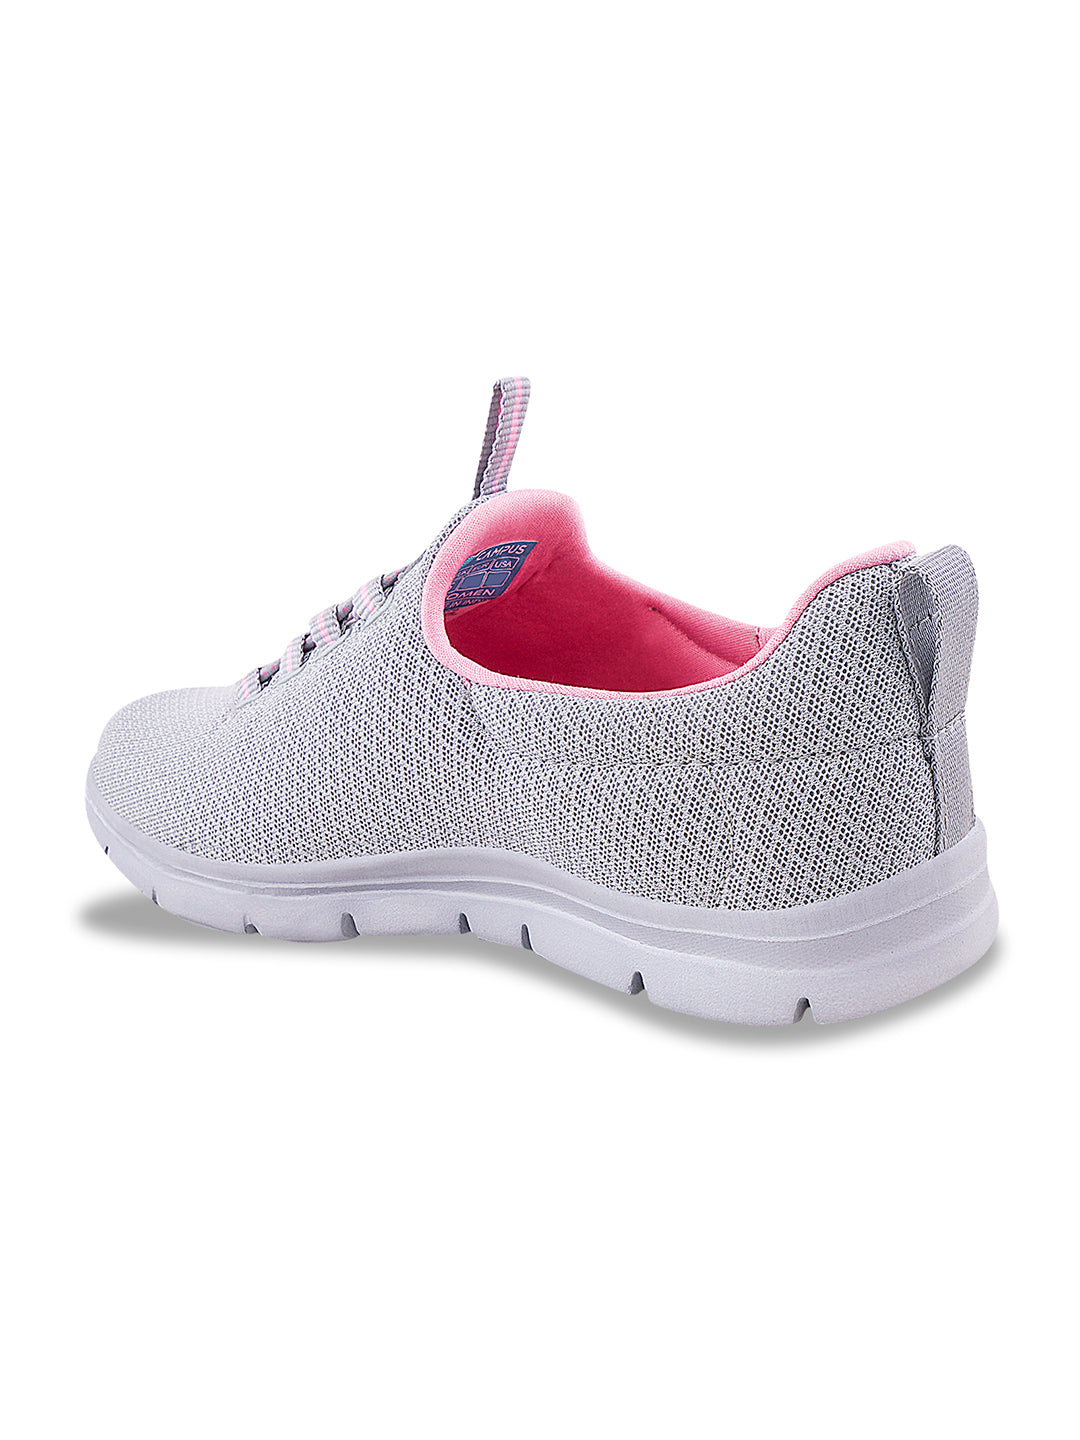 Skechers Shoes: Women's 77217 GYPK Grey Pink Comfort Flex Health Care Pro  Slip Resistant Athletic Shoe